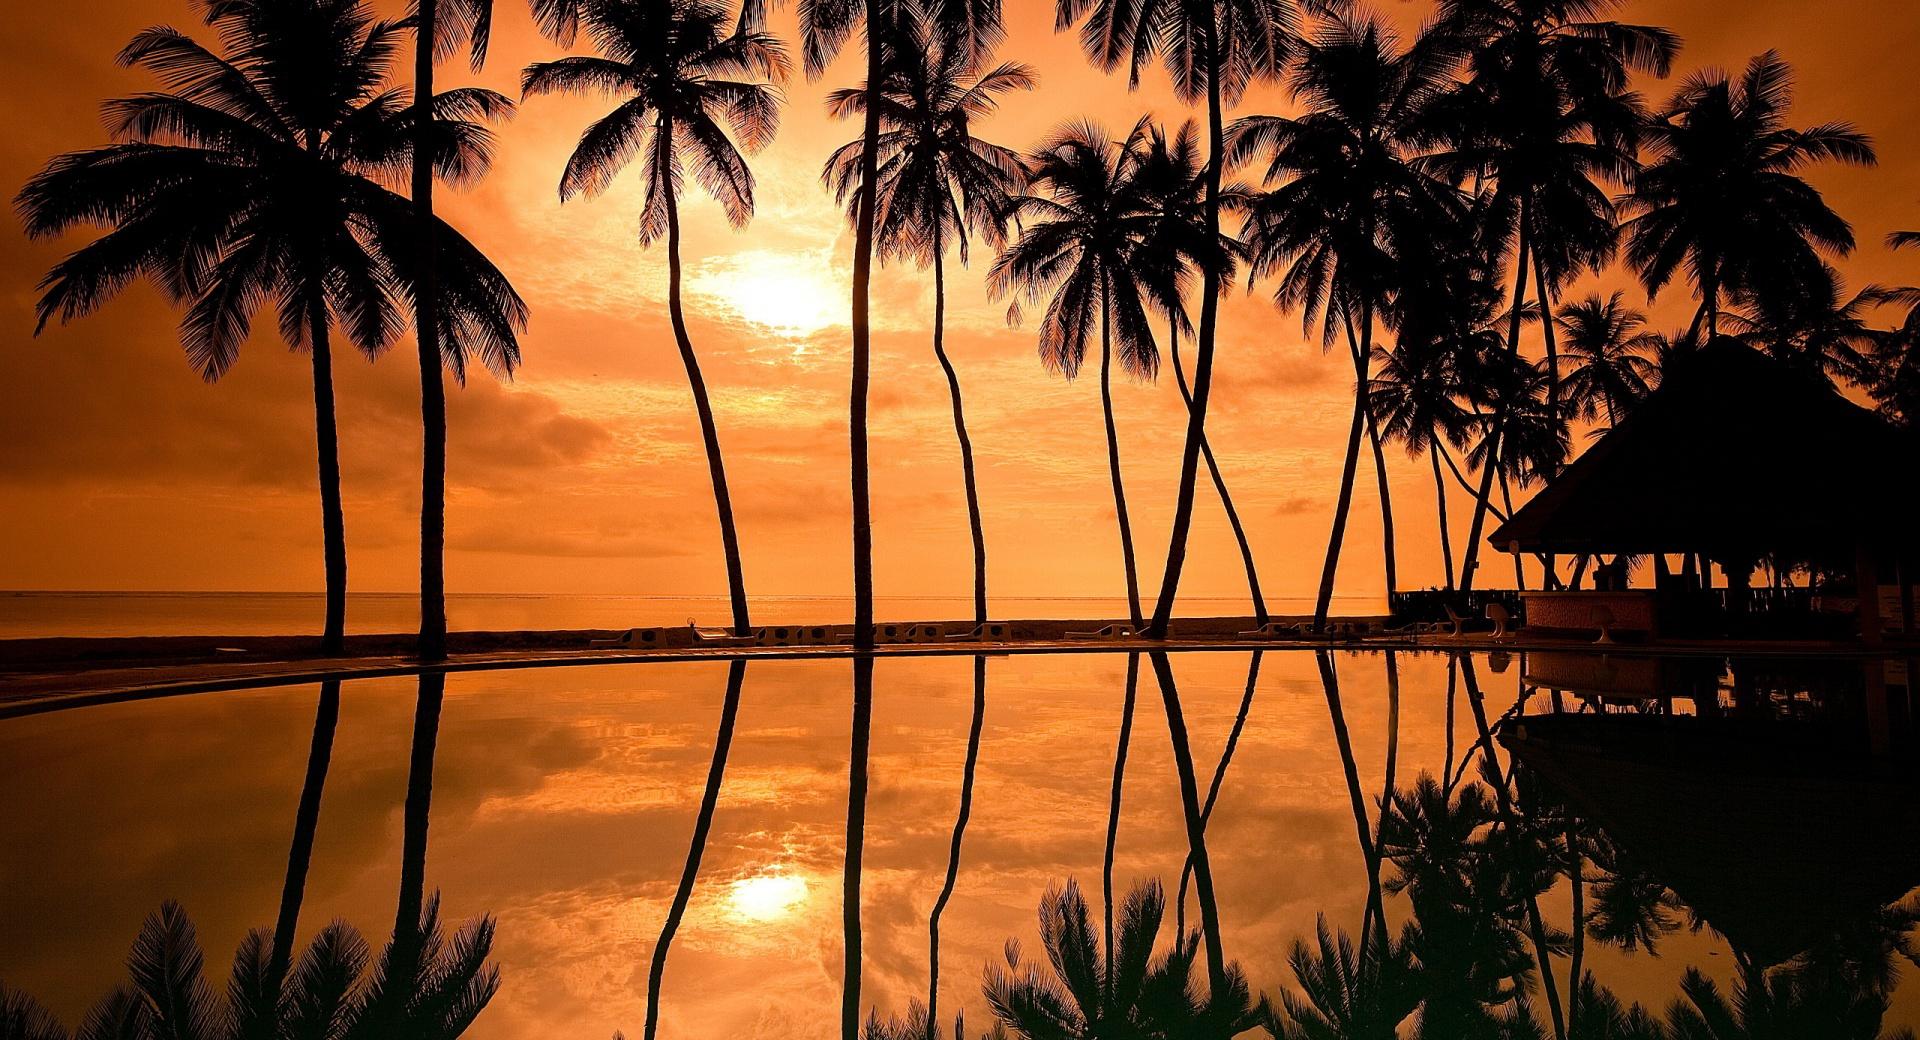 Hawaiian Beach Sunset Reflection at 1024 x 1024 iPad size wallpapers HD quality